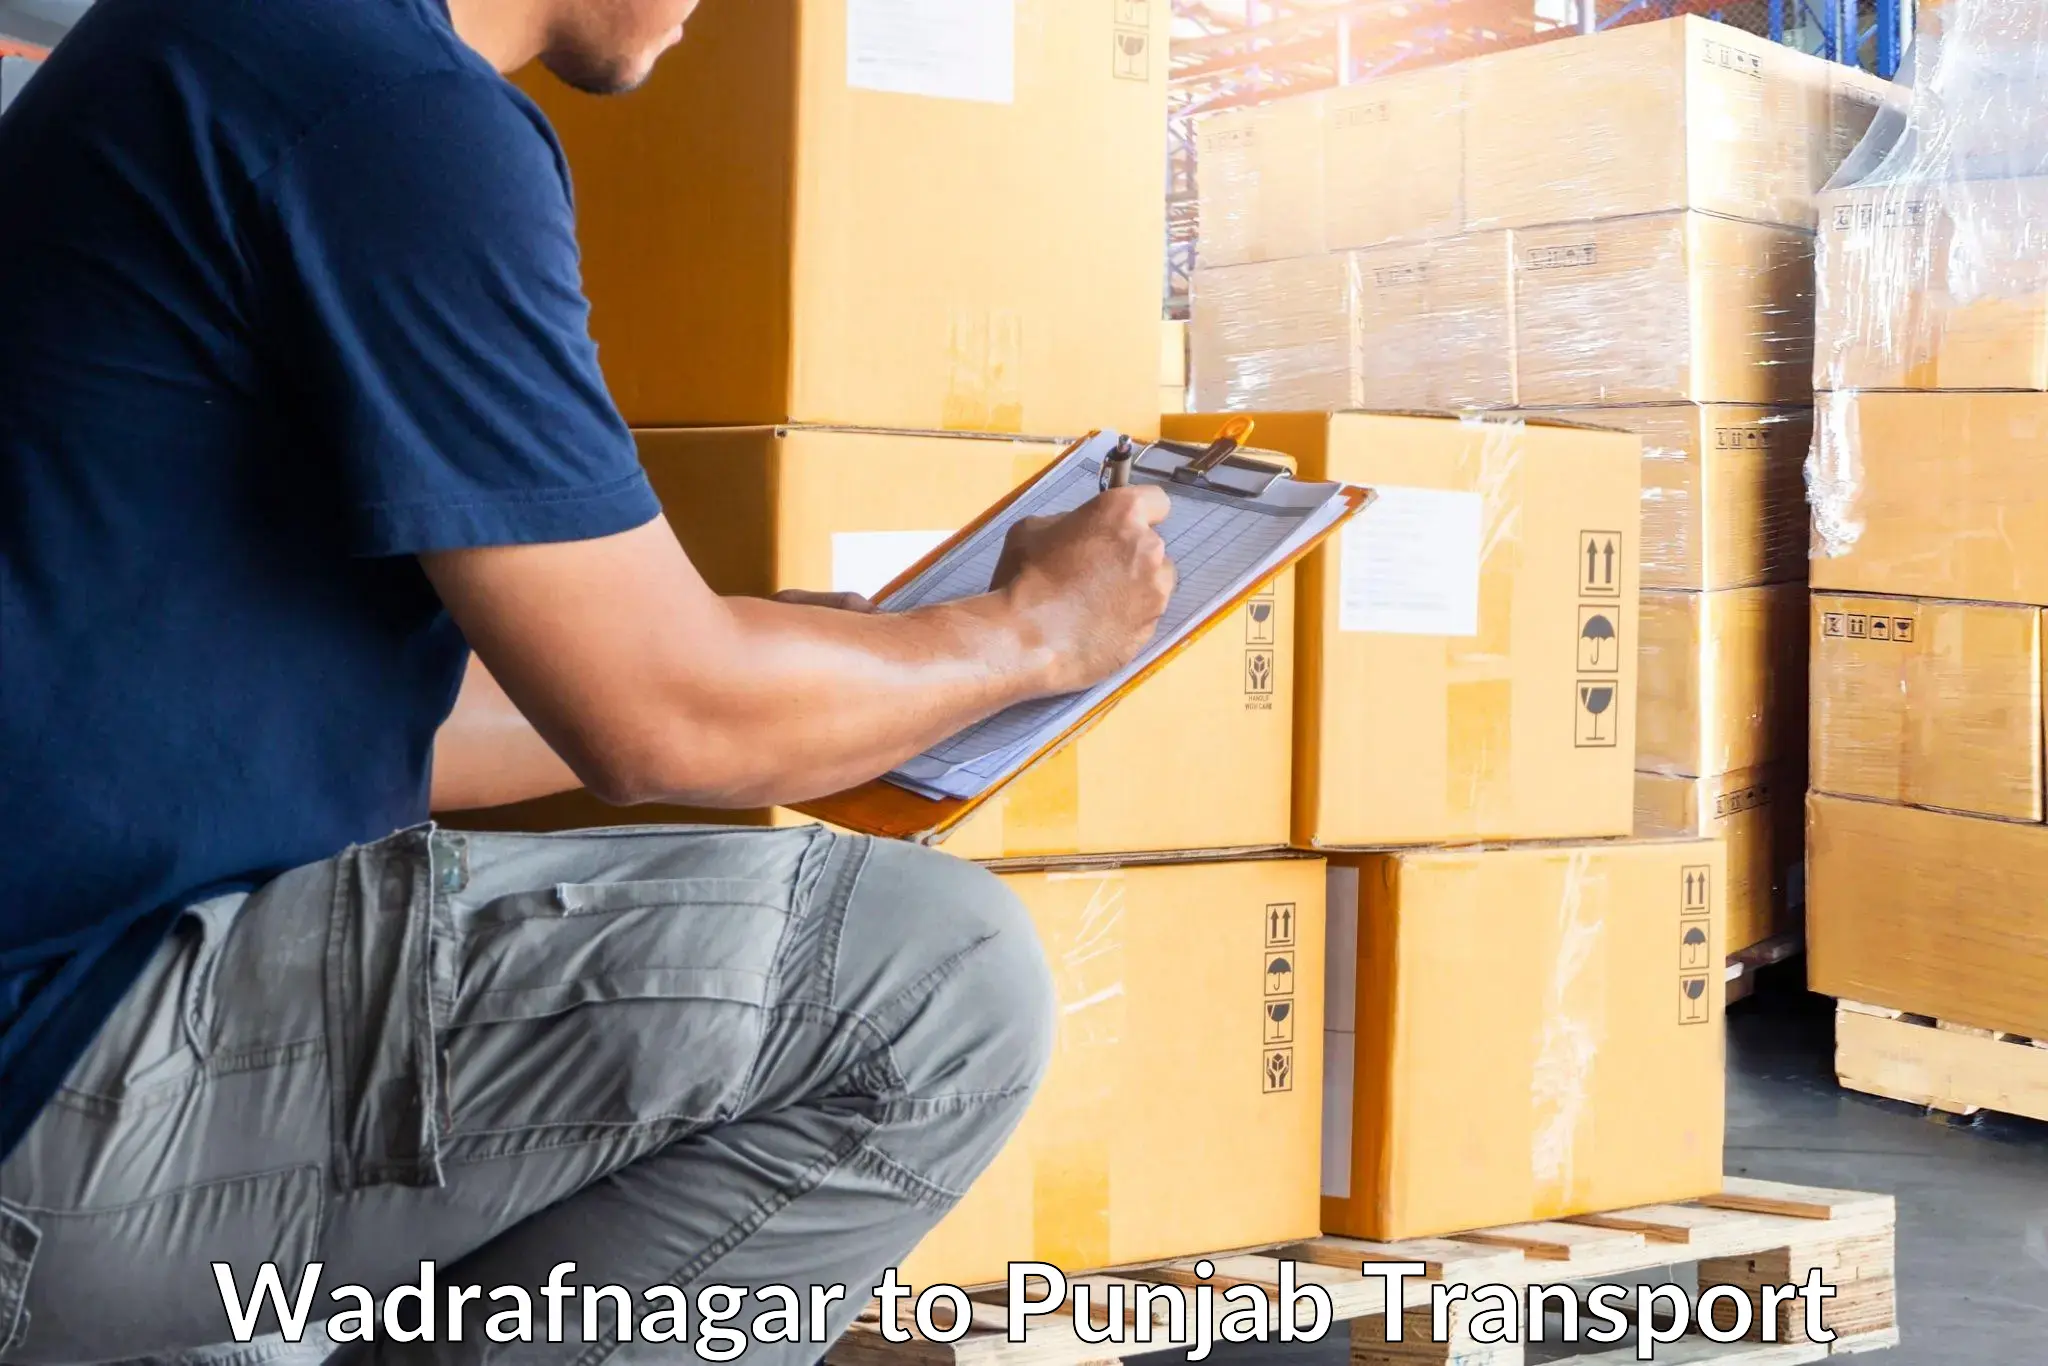 Goods delivery service Wadrafnagar to Firozpur